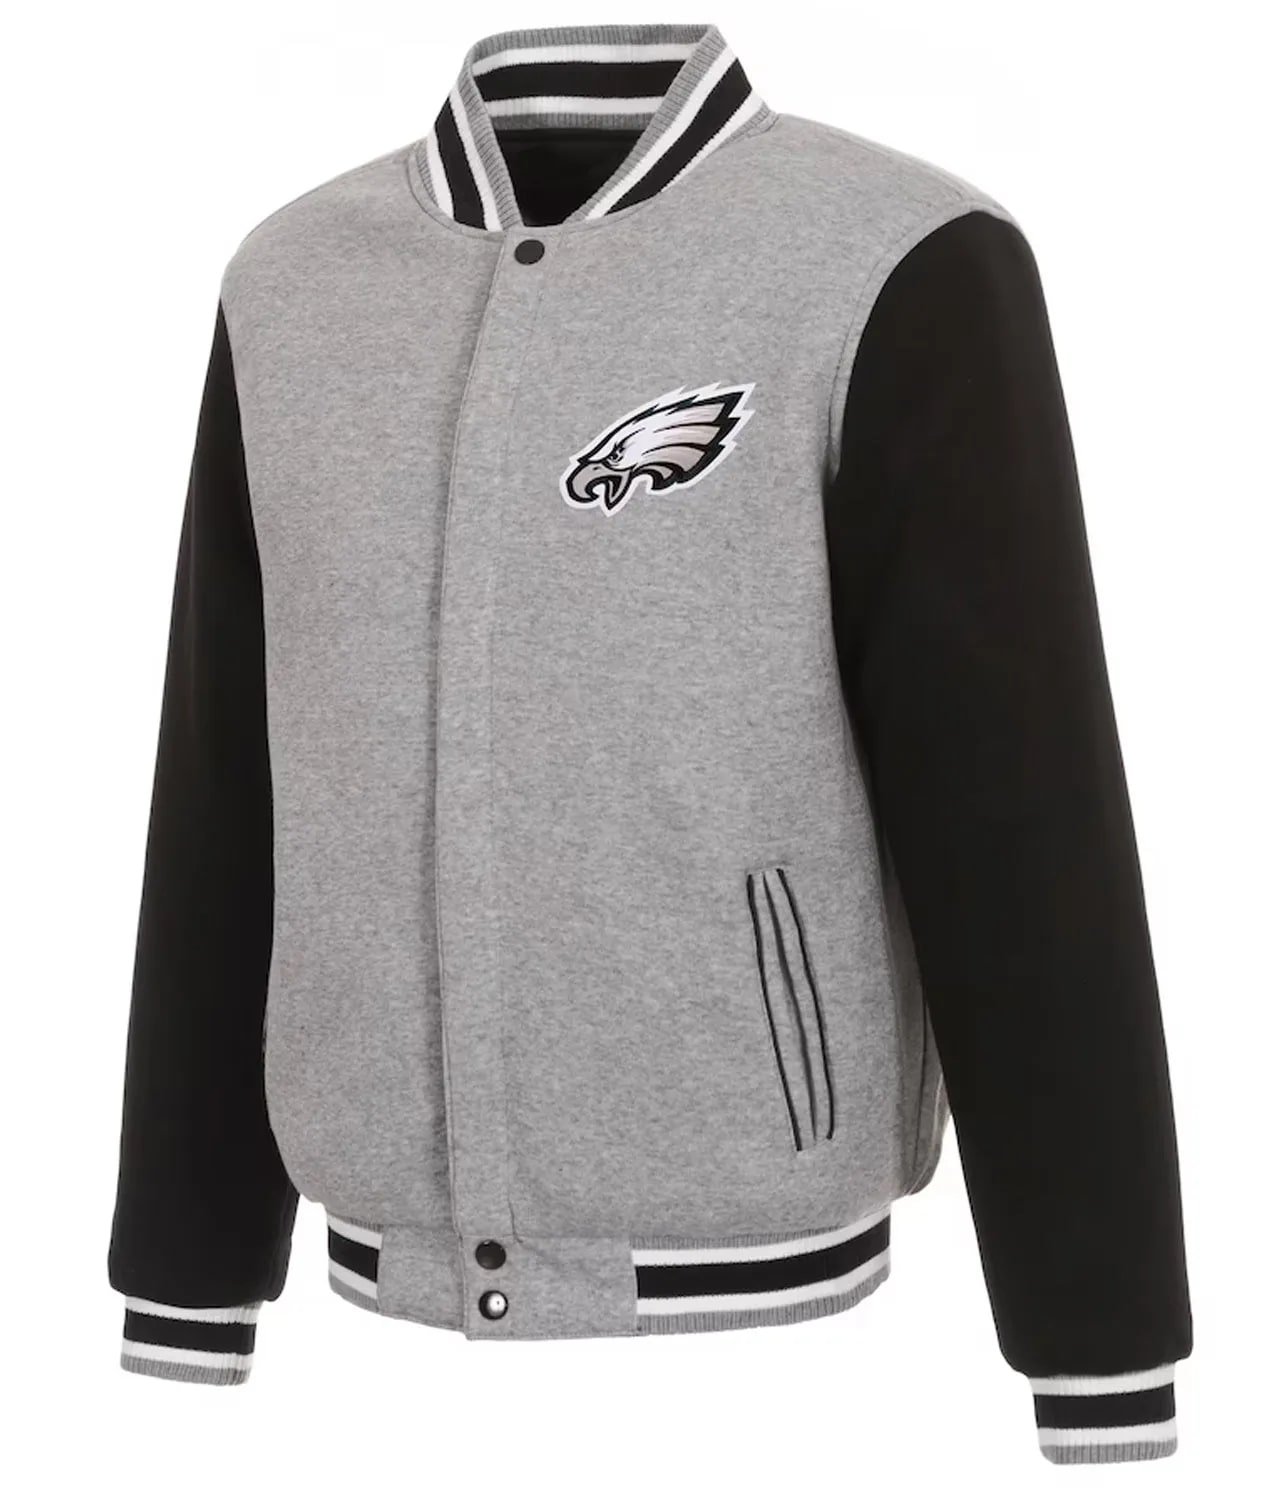 Philadelphia Eagles Gray and Black Varsity Jacket